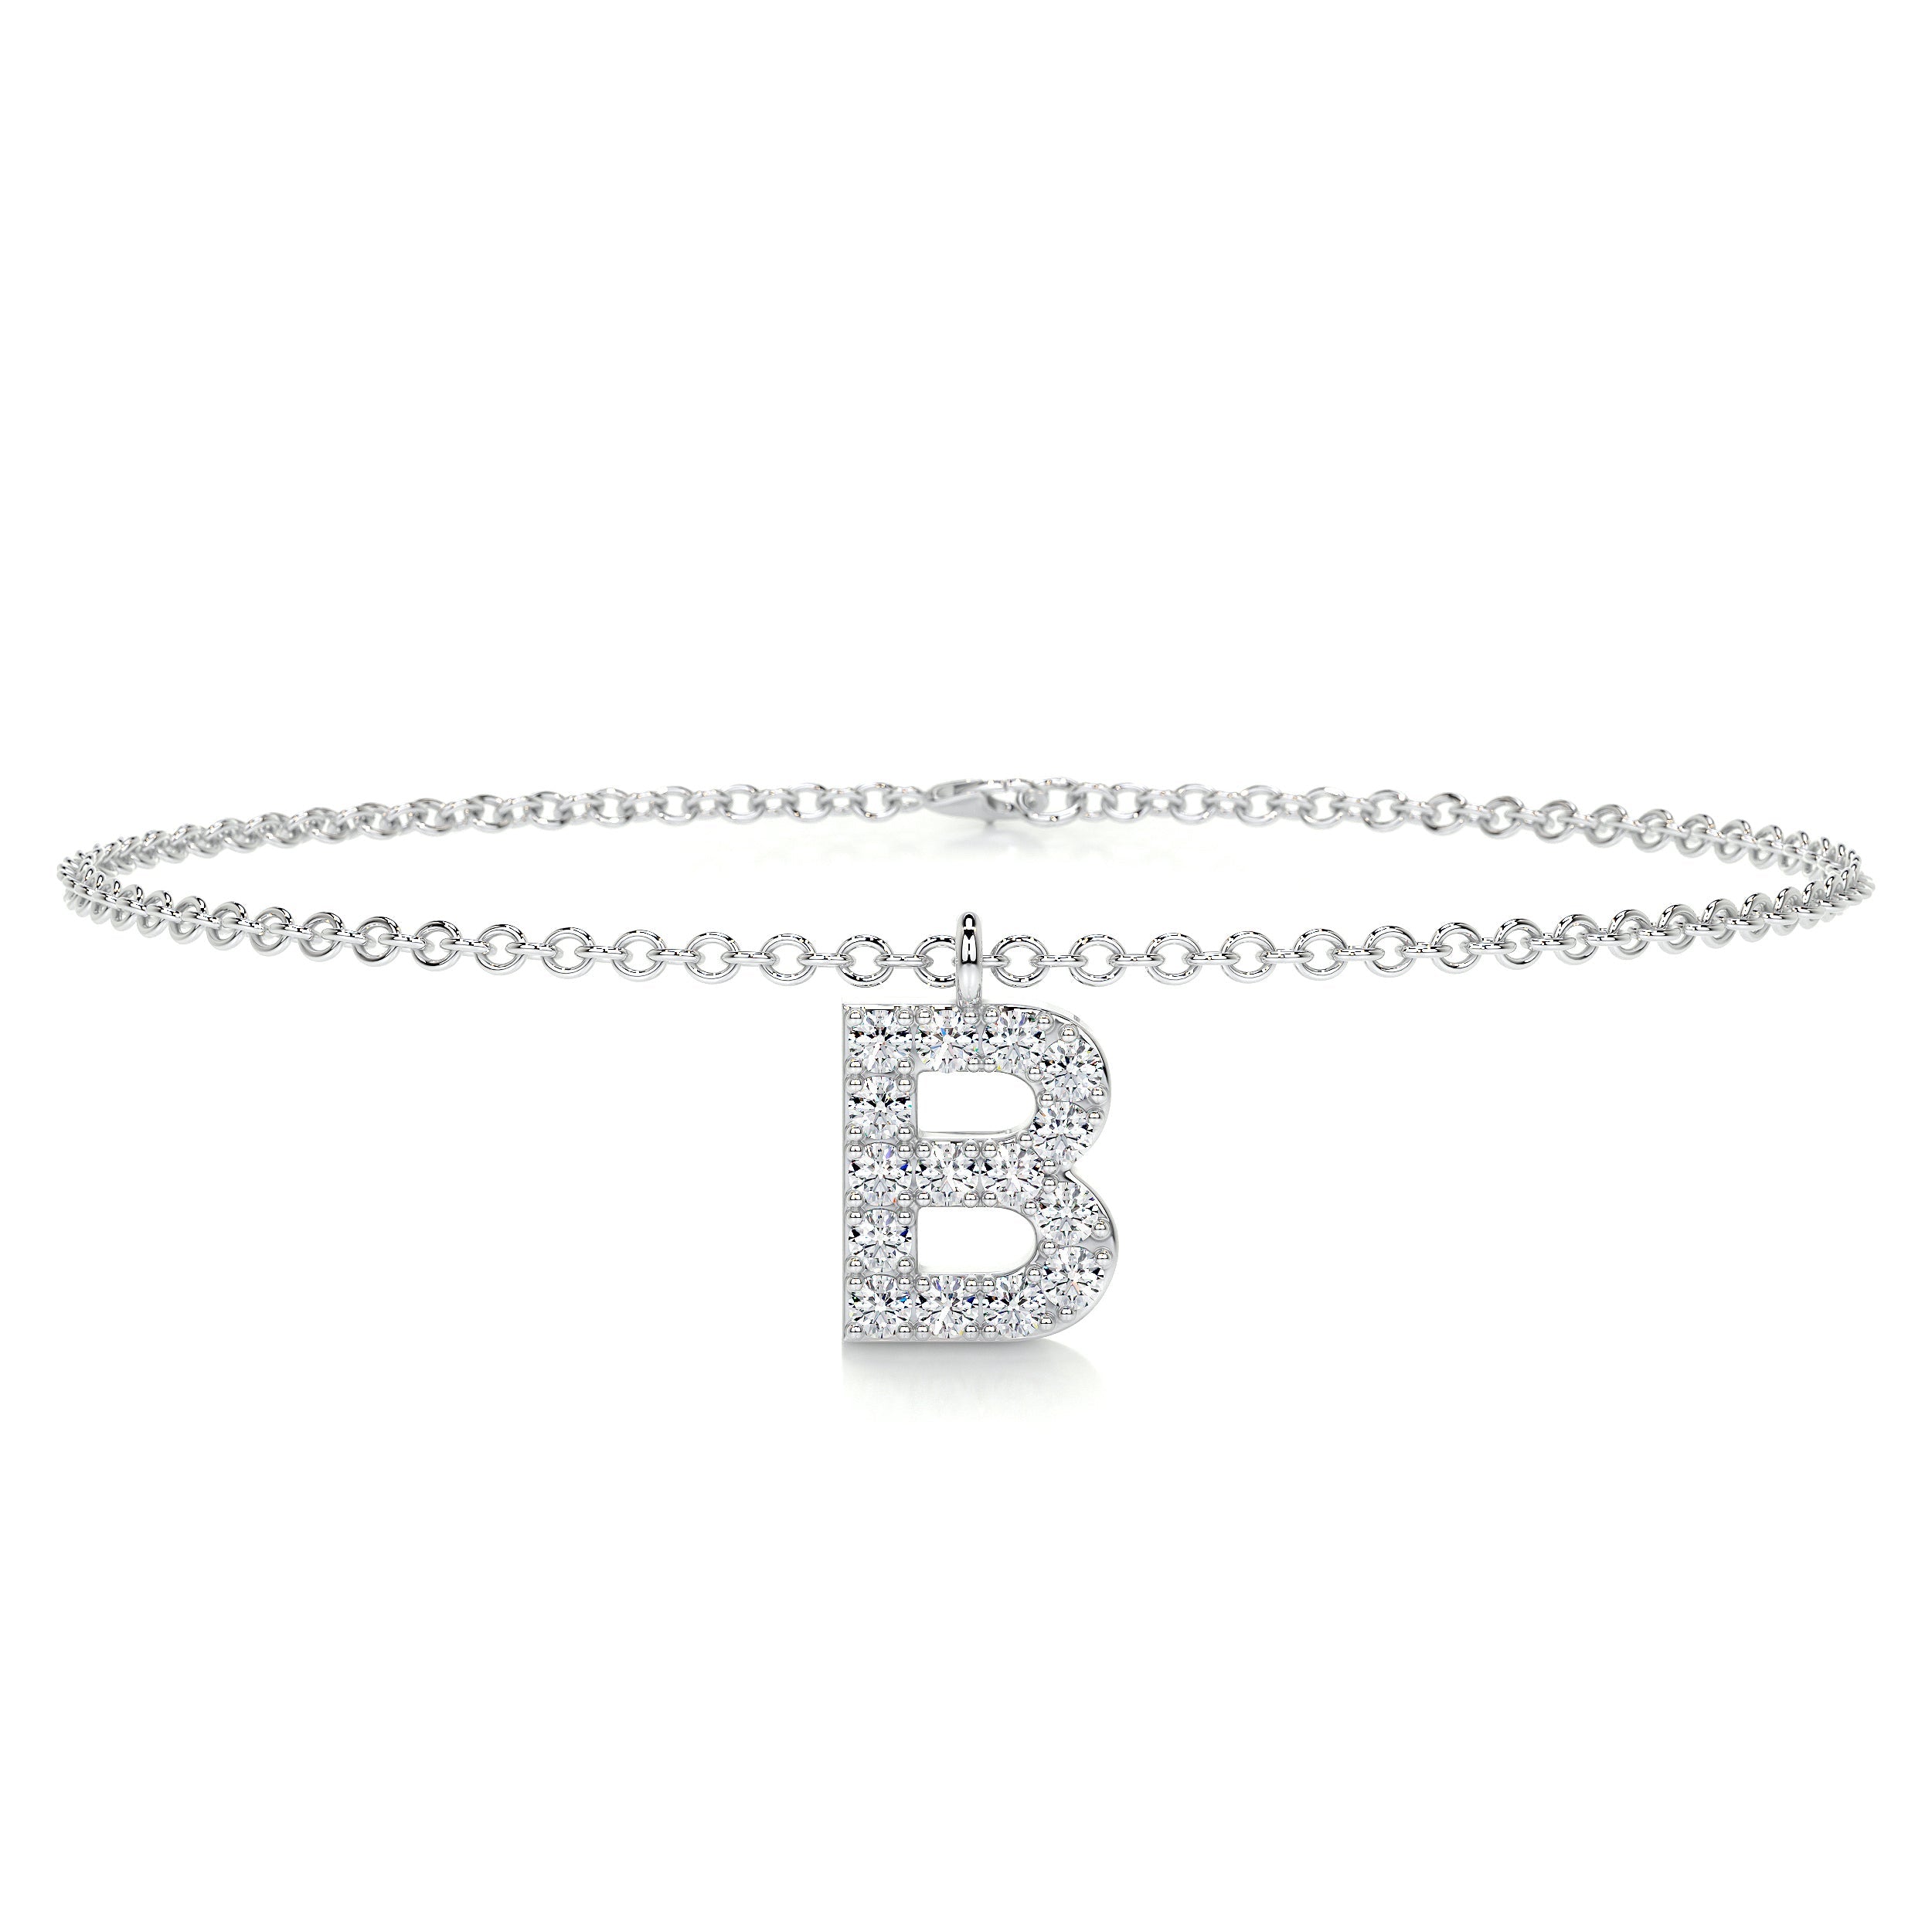 Barbara Letter Diamonds Bracelet   (0.15 Carat) -14K White Gold (RTS)